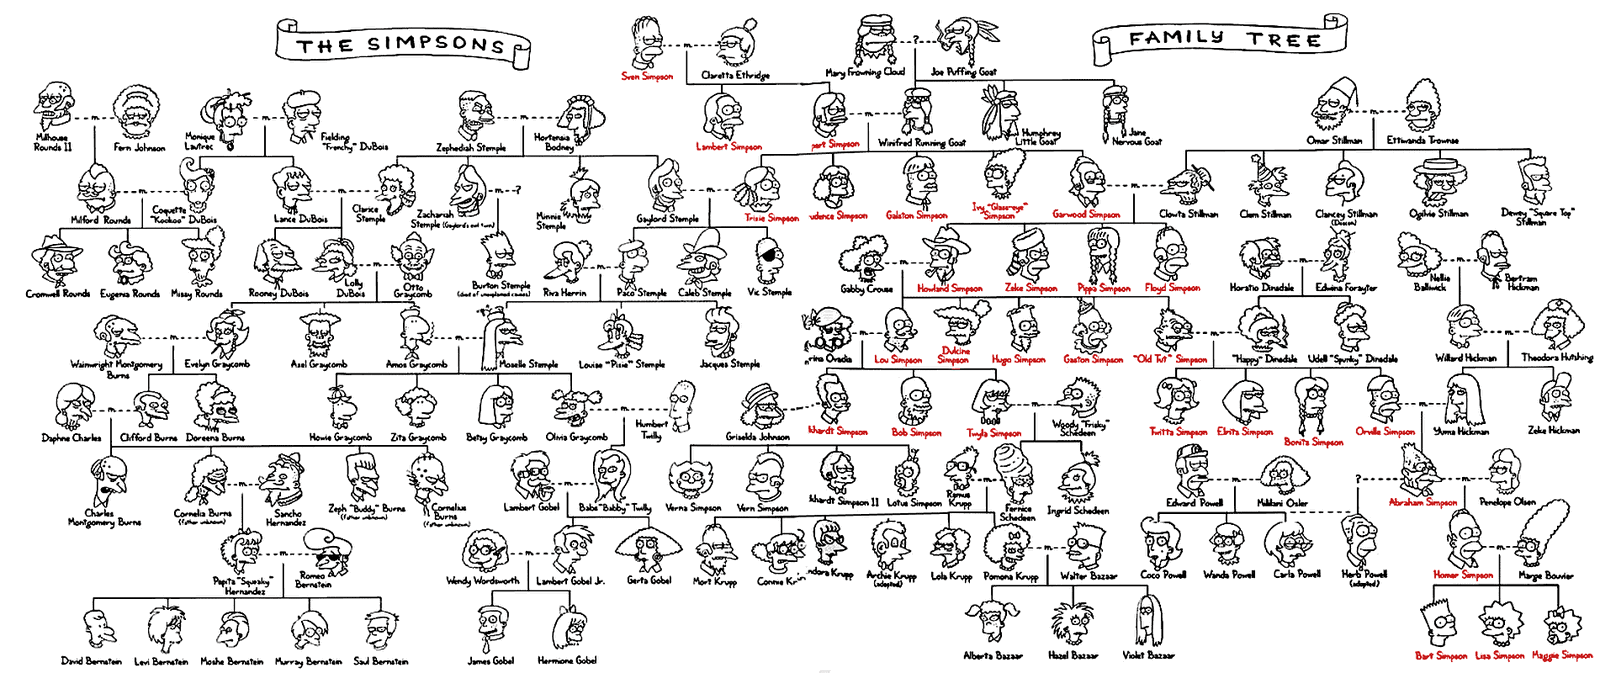 The Simpson's Family Tree of